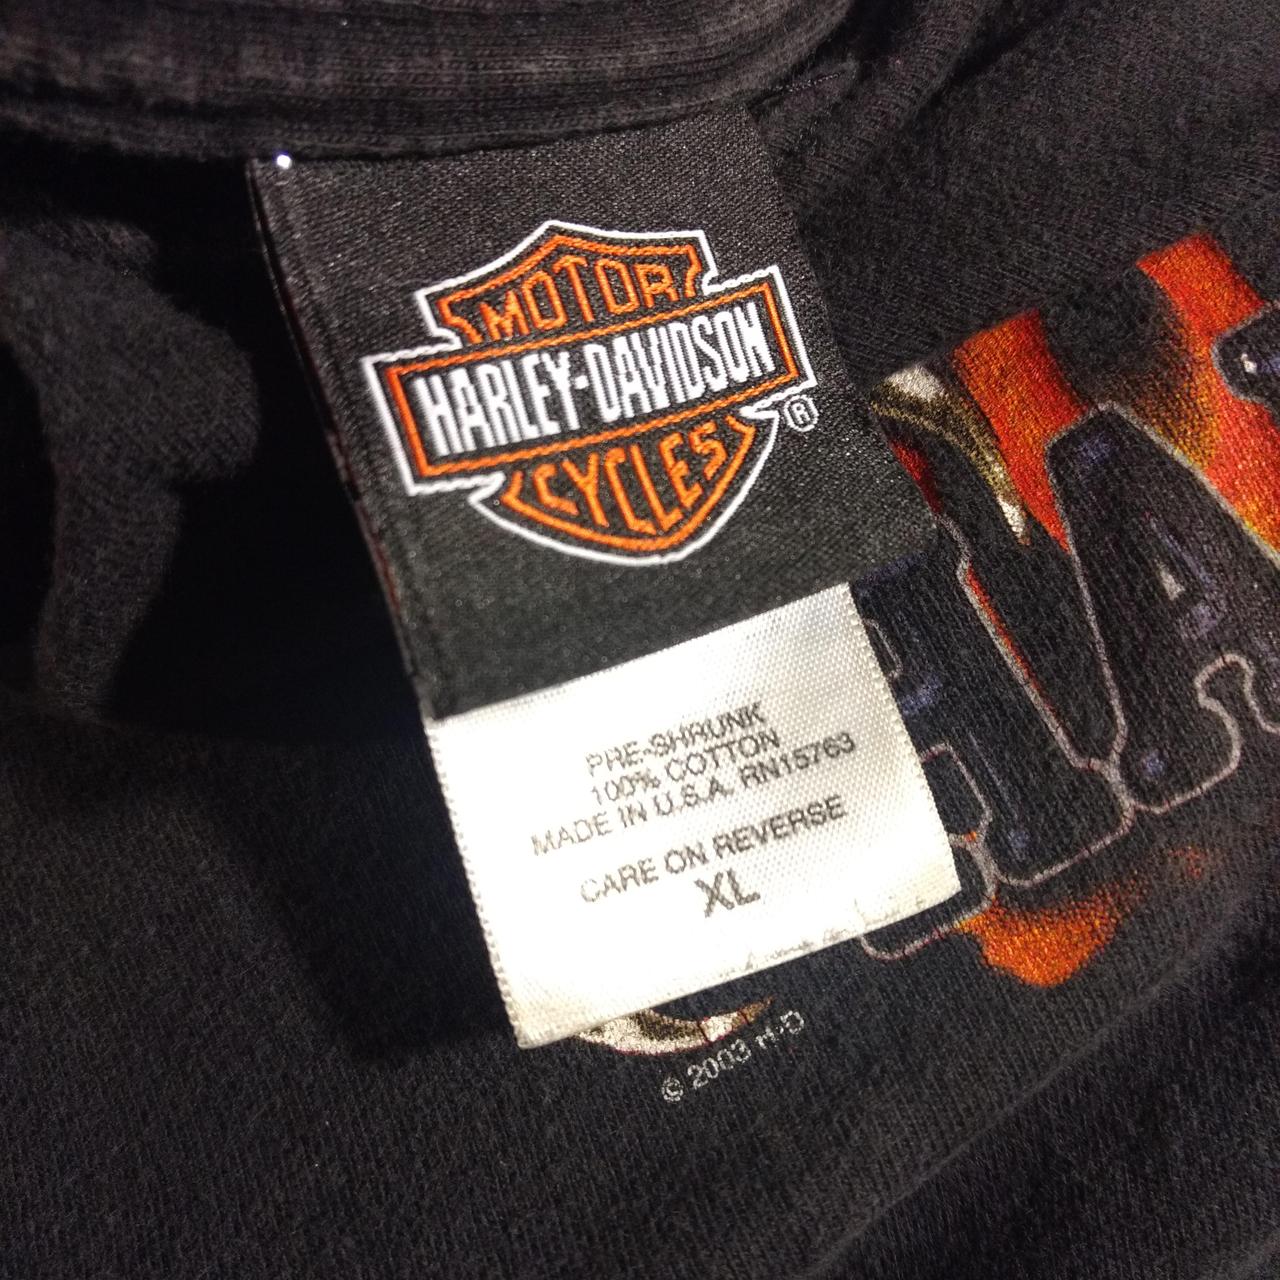 Harley Davidson Men's Black and Orange T-shirt (4)